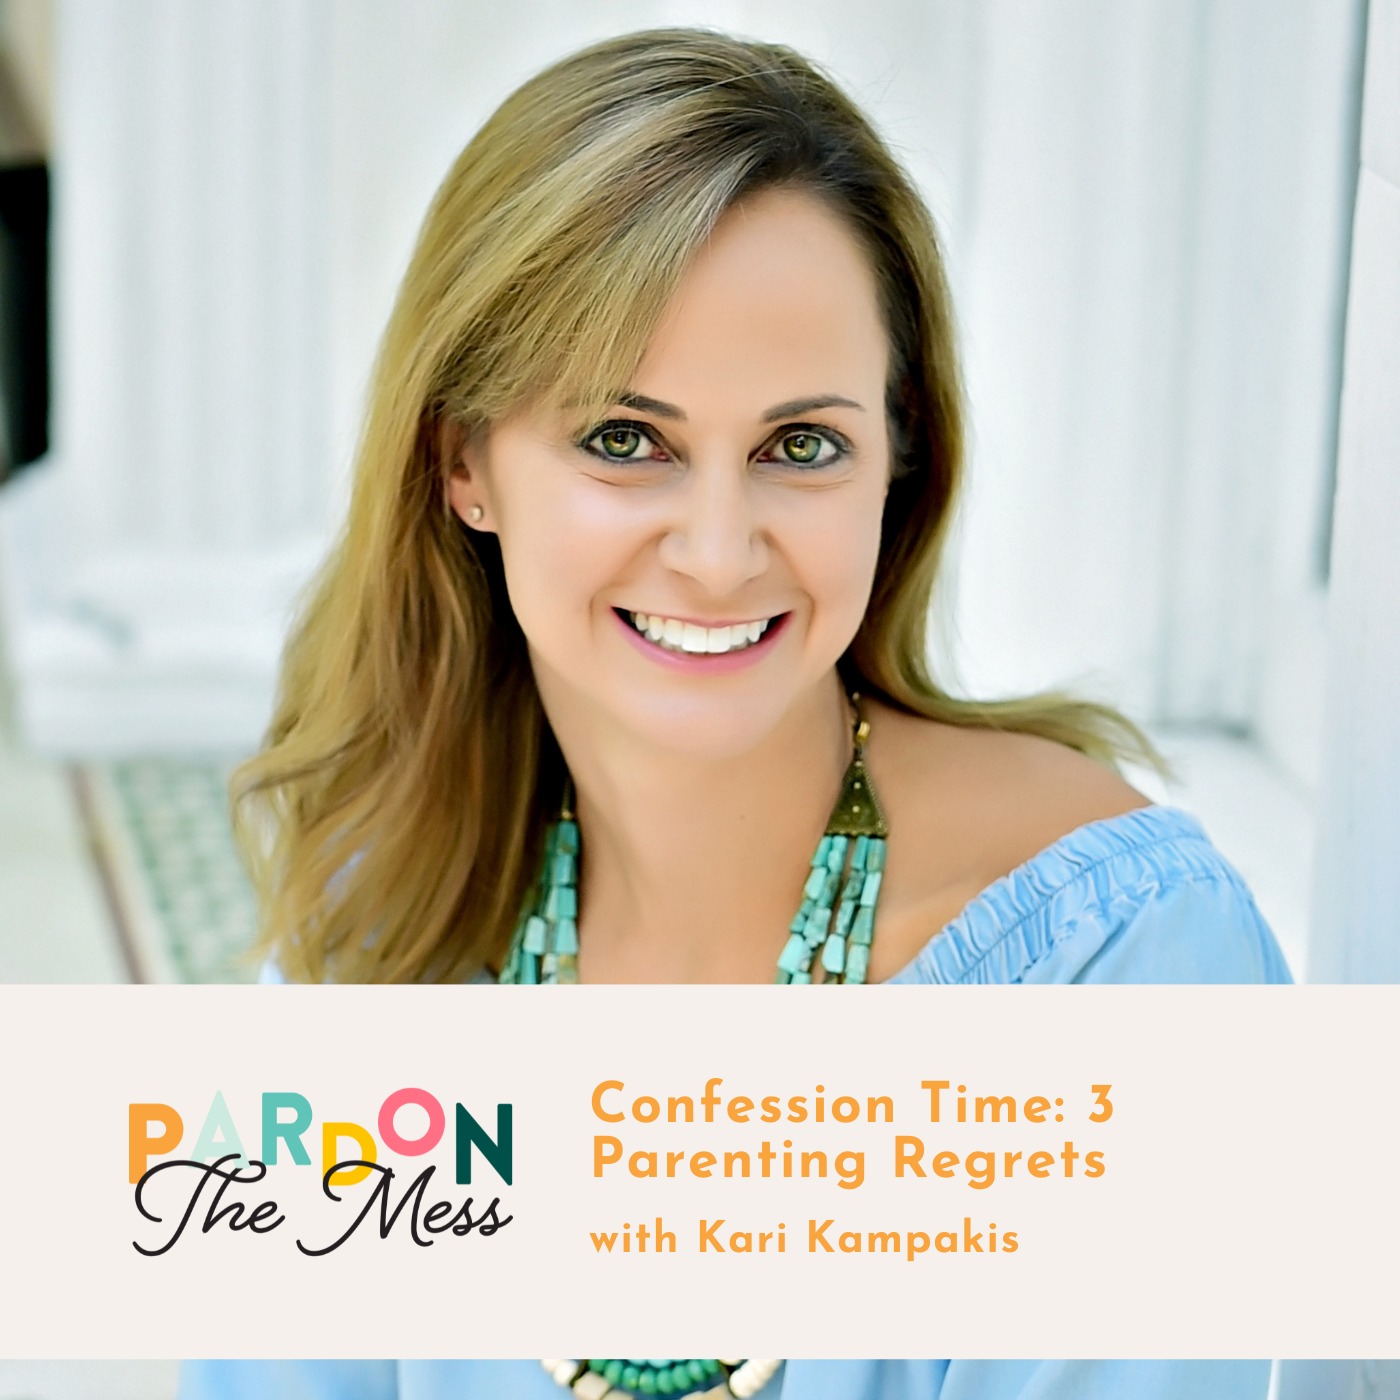 Confession Time: 3 Parenting Regrets with Kari Kampakis